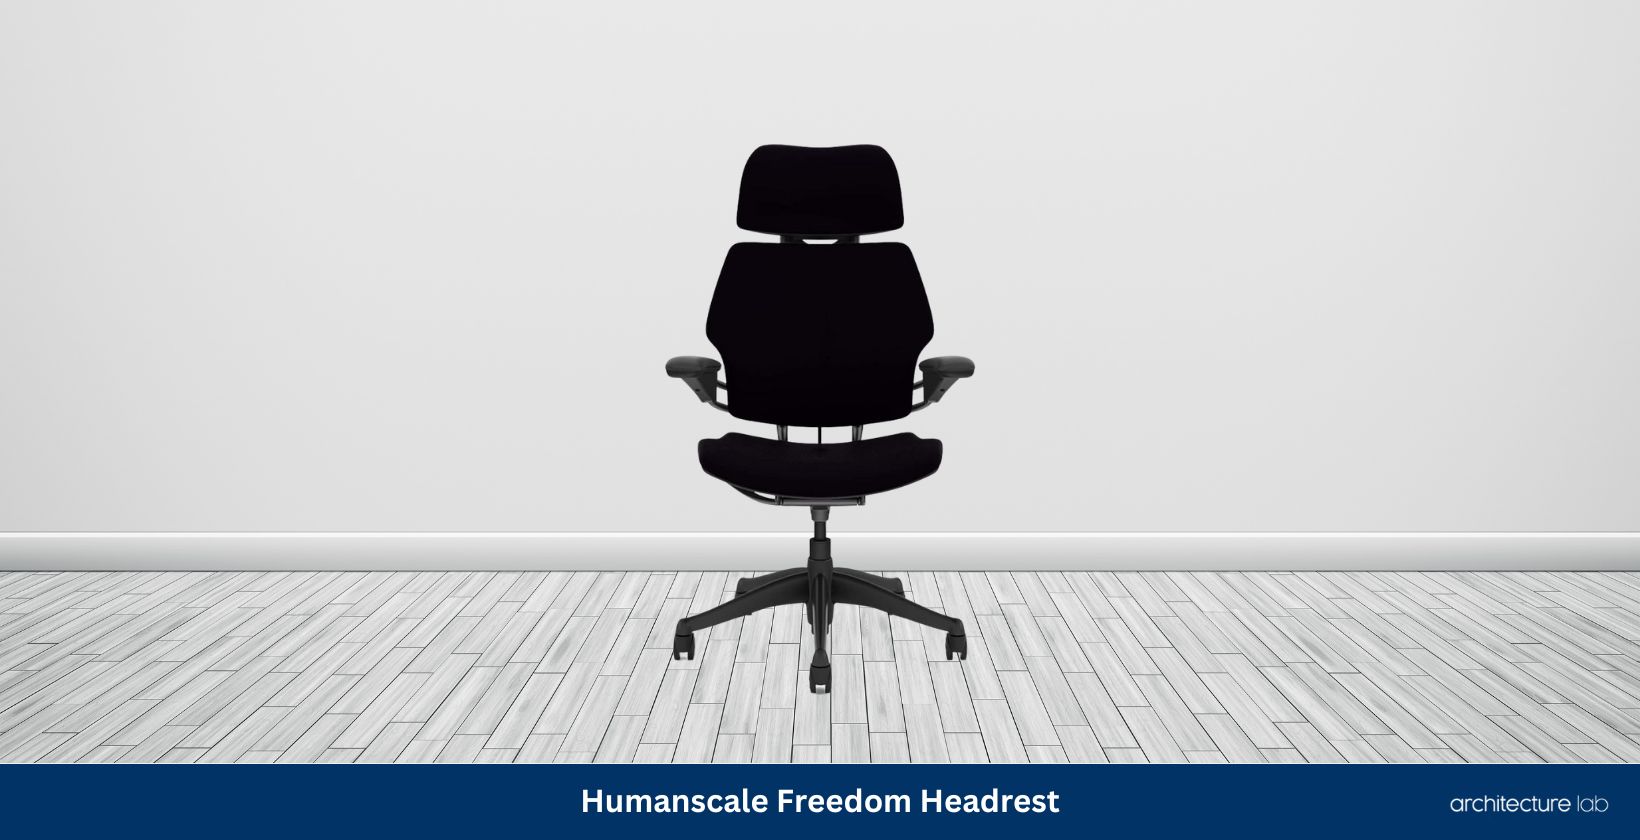 Humanscale freedom headrest